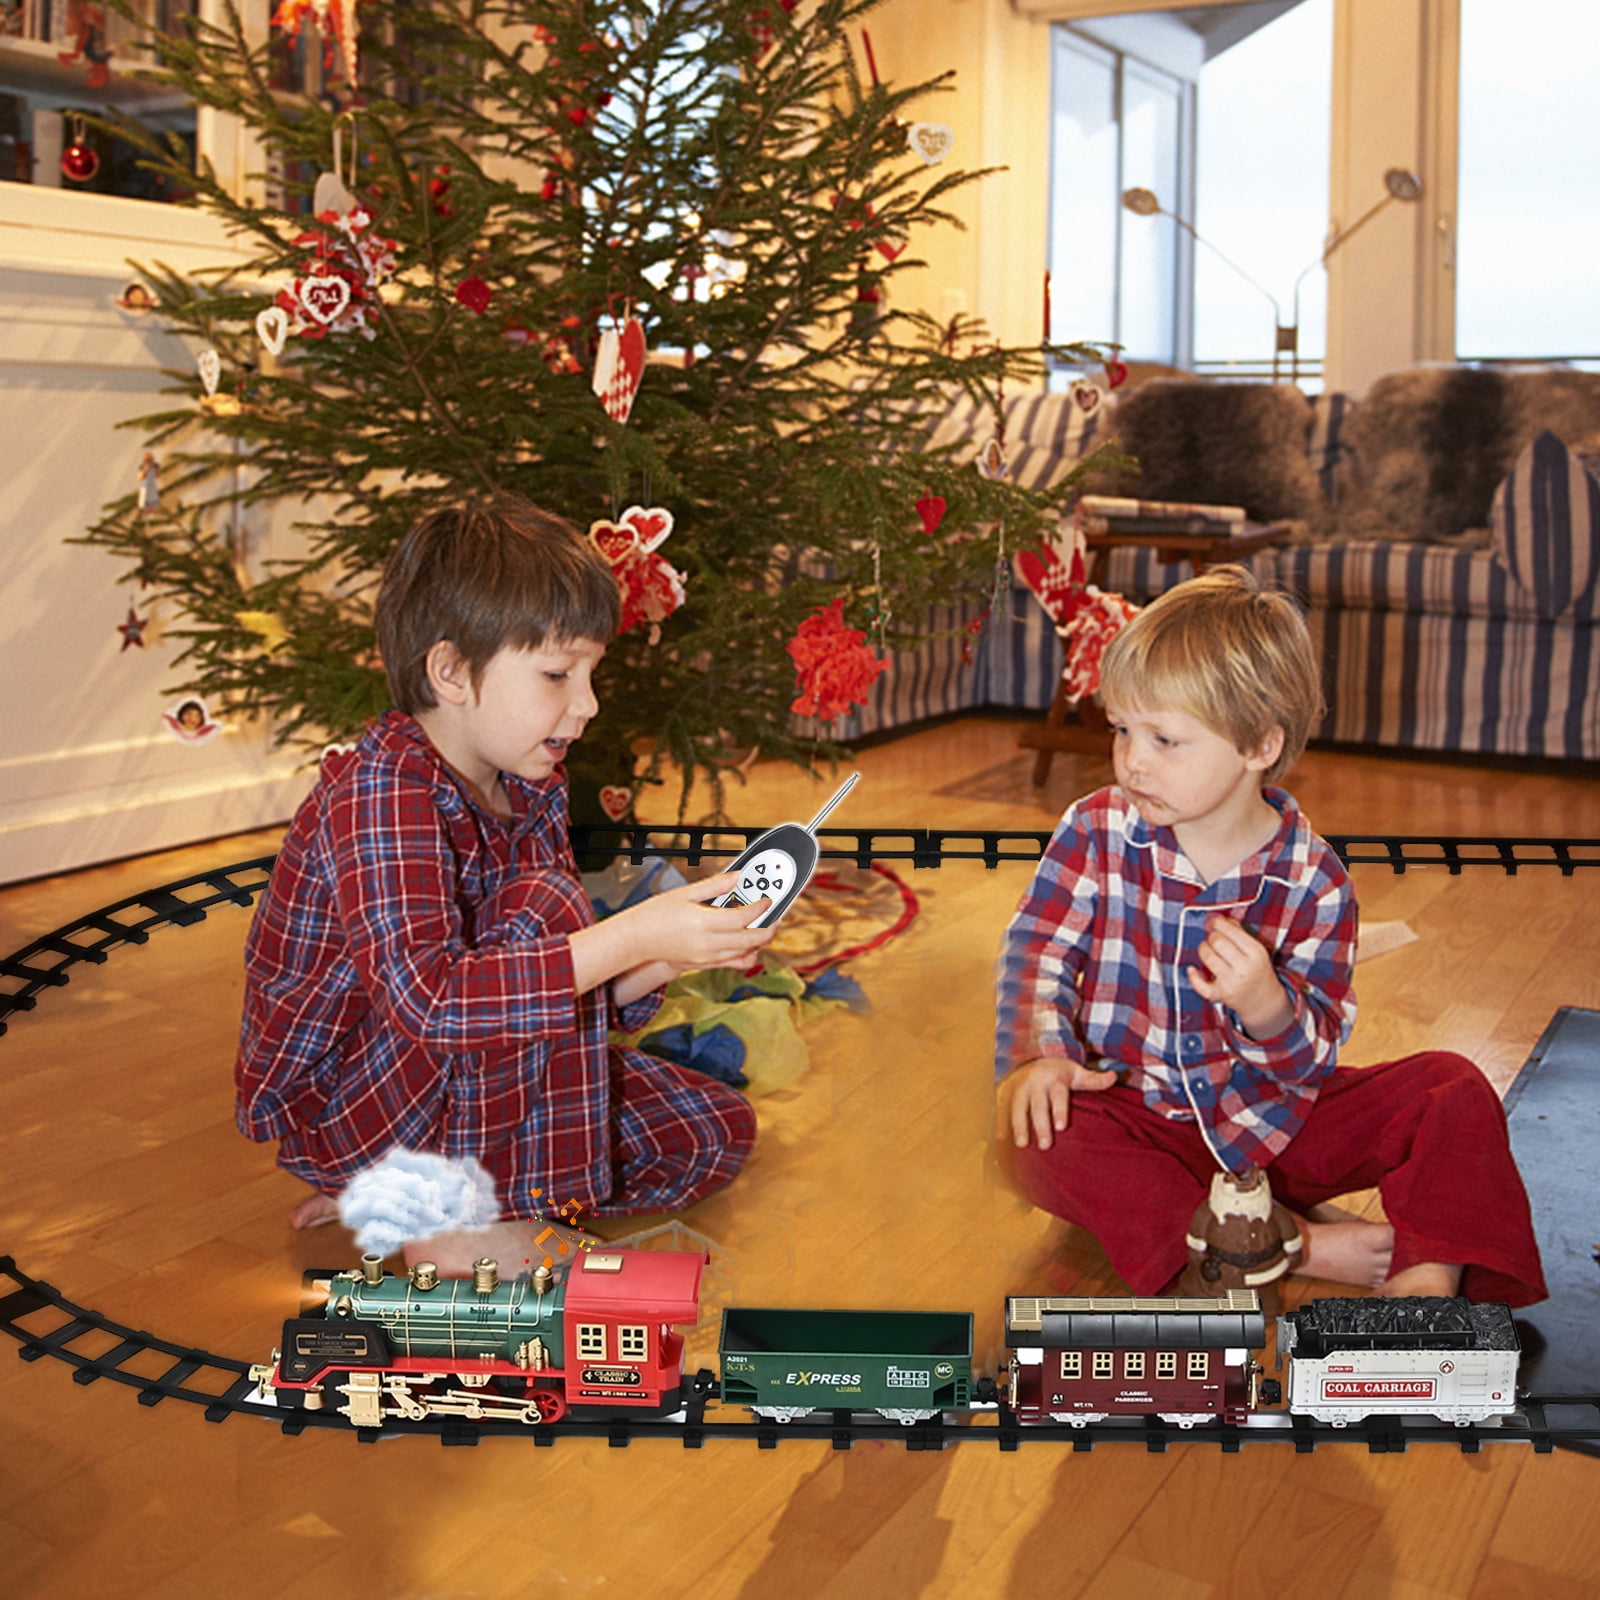 Train Set Toy, RC Train Set w/ Smoke, Lights, Sounds Railway , Birthday Gift Christmas Toy for Kids Boys